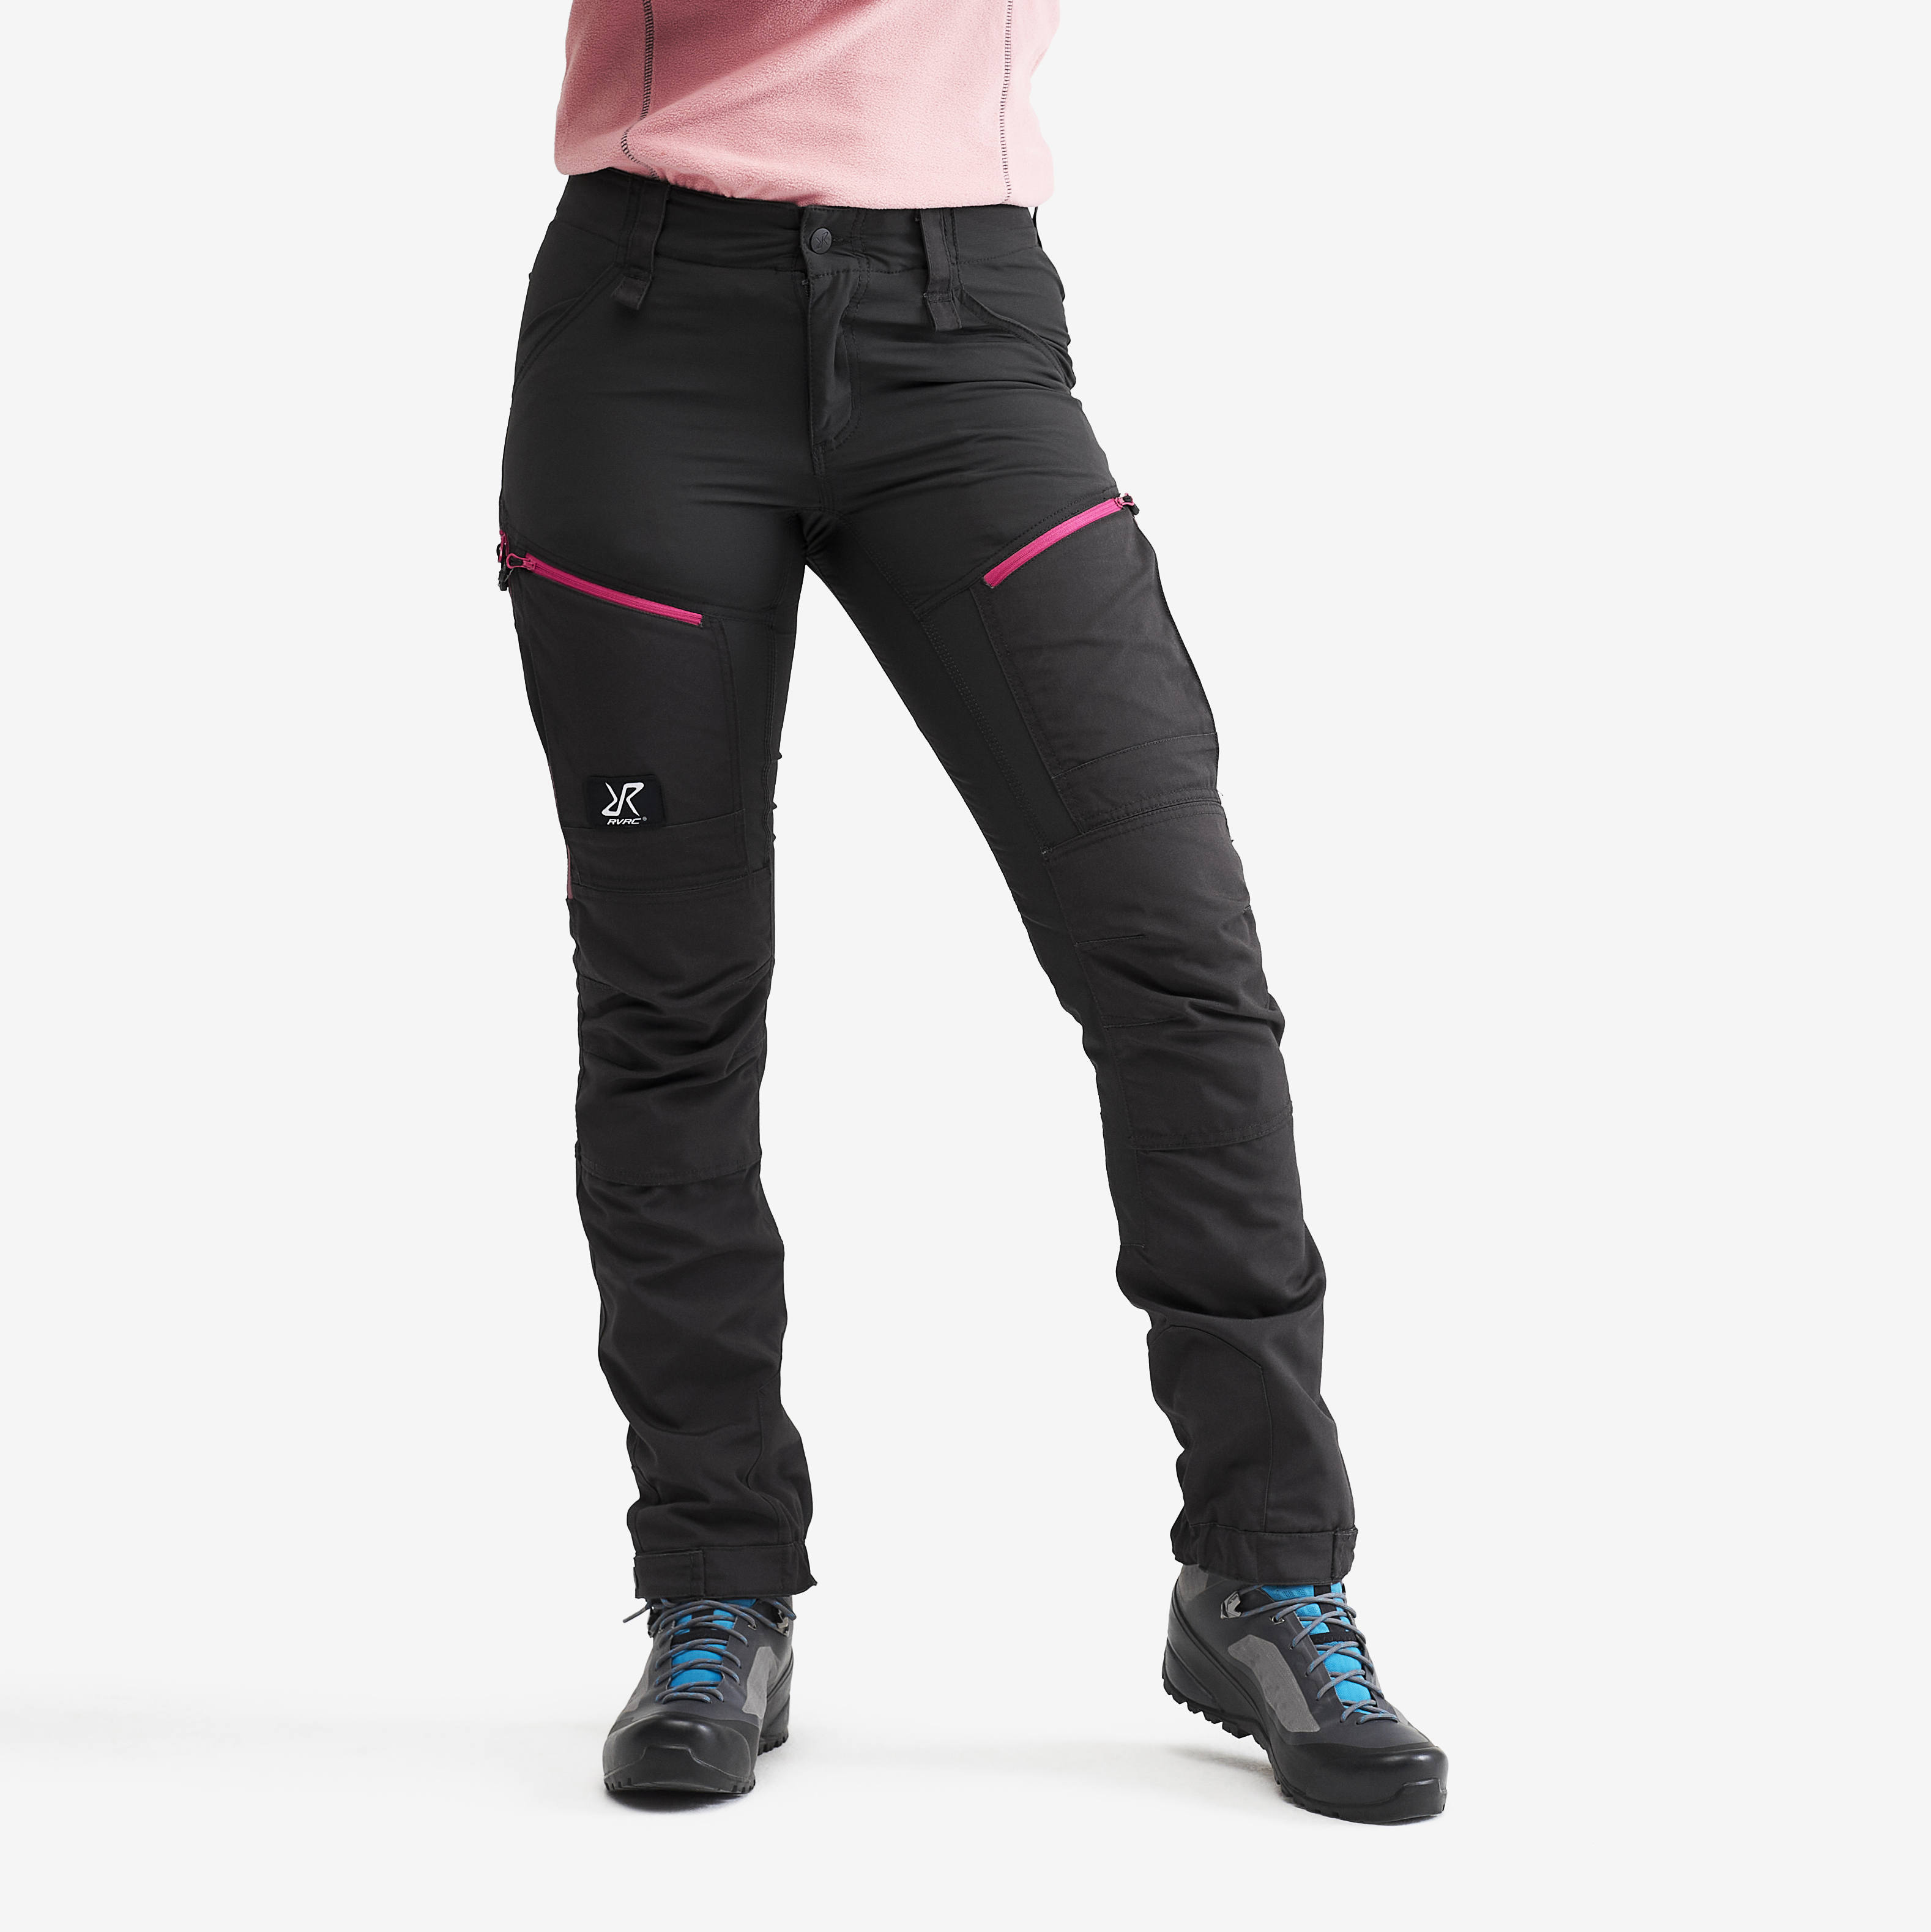 RVRC GP Pro hiking trousers for women in dark grey